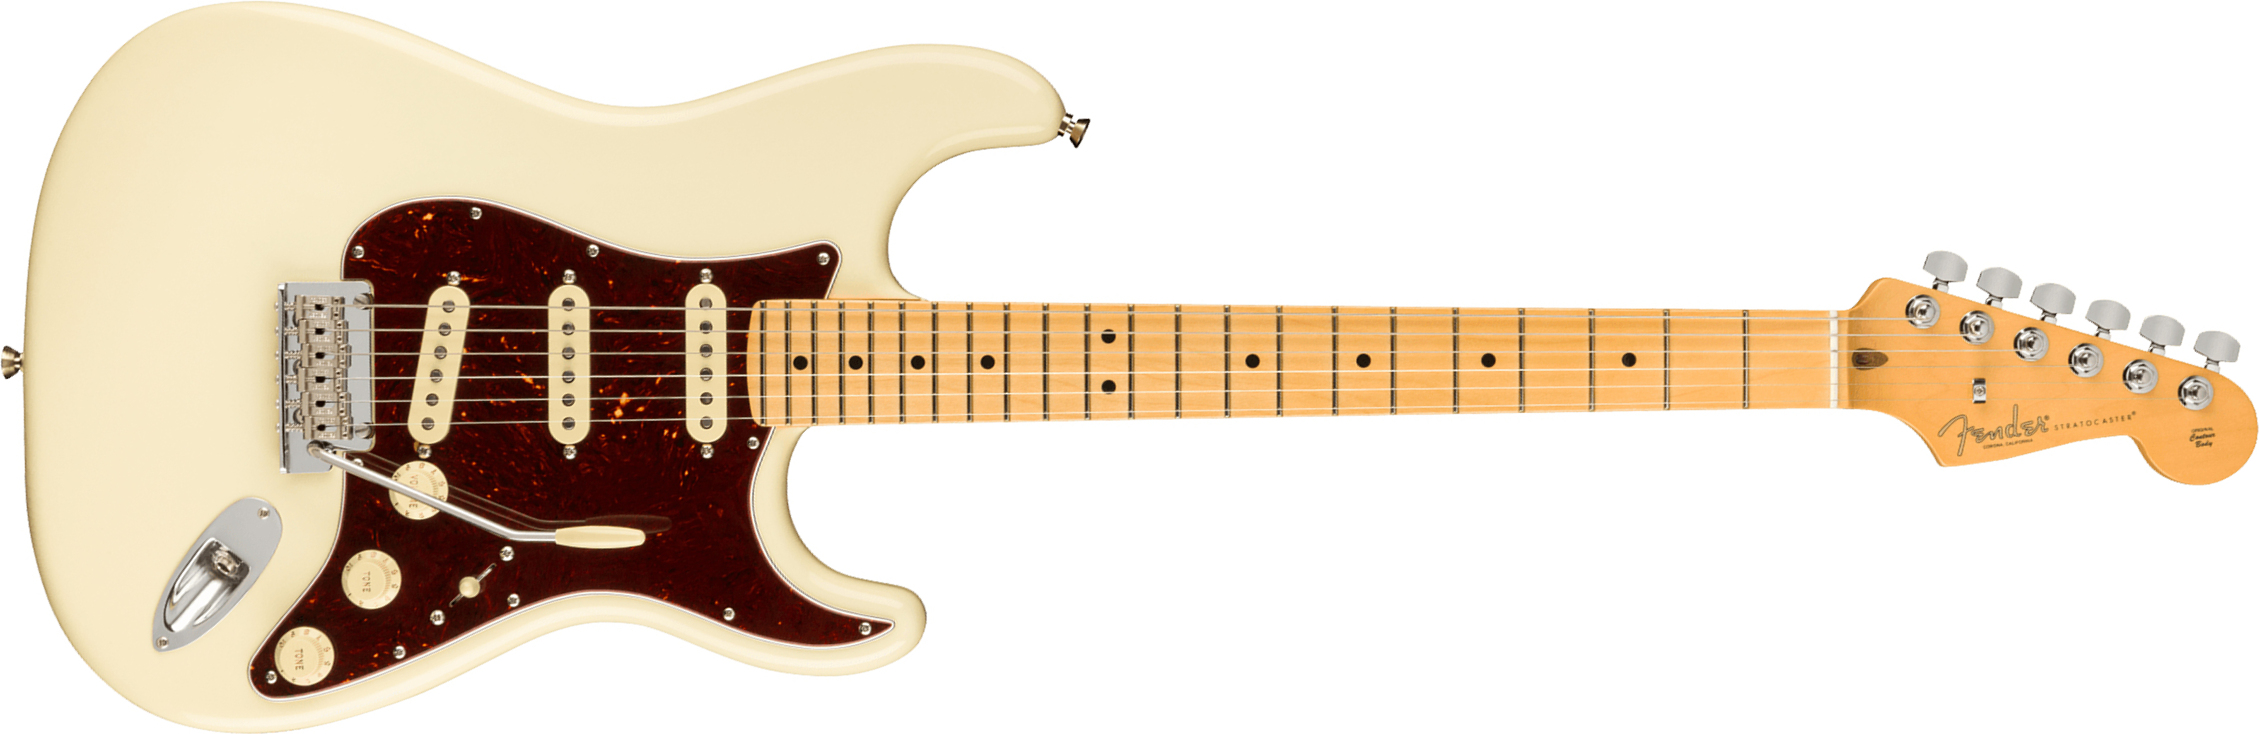 Fender Strat American Professional Ii Usa Mn - Olympic White - Guitarra eléctrica con forma de str. - Main picture